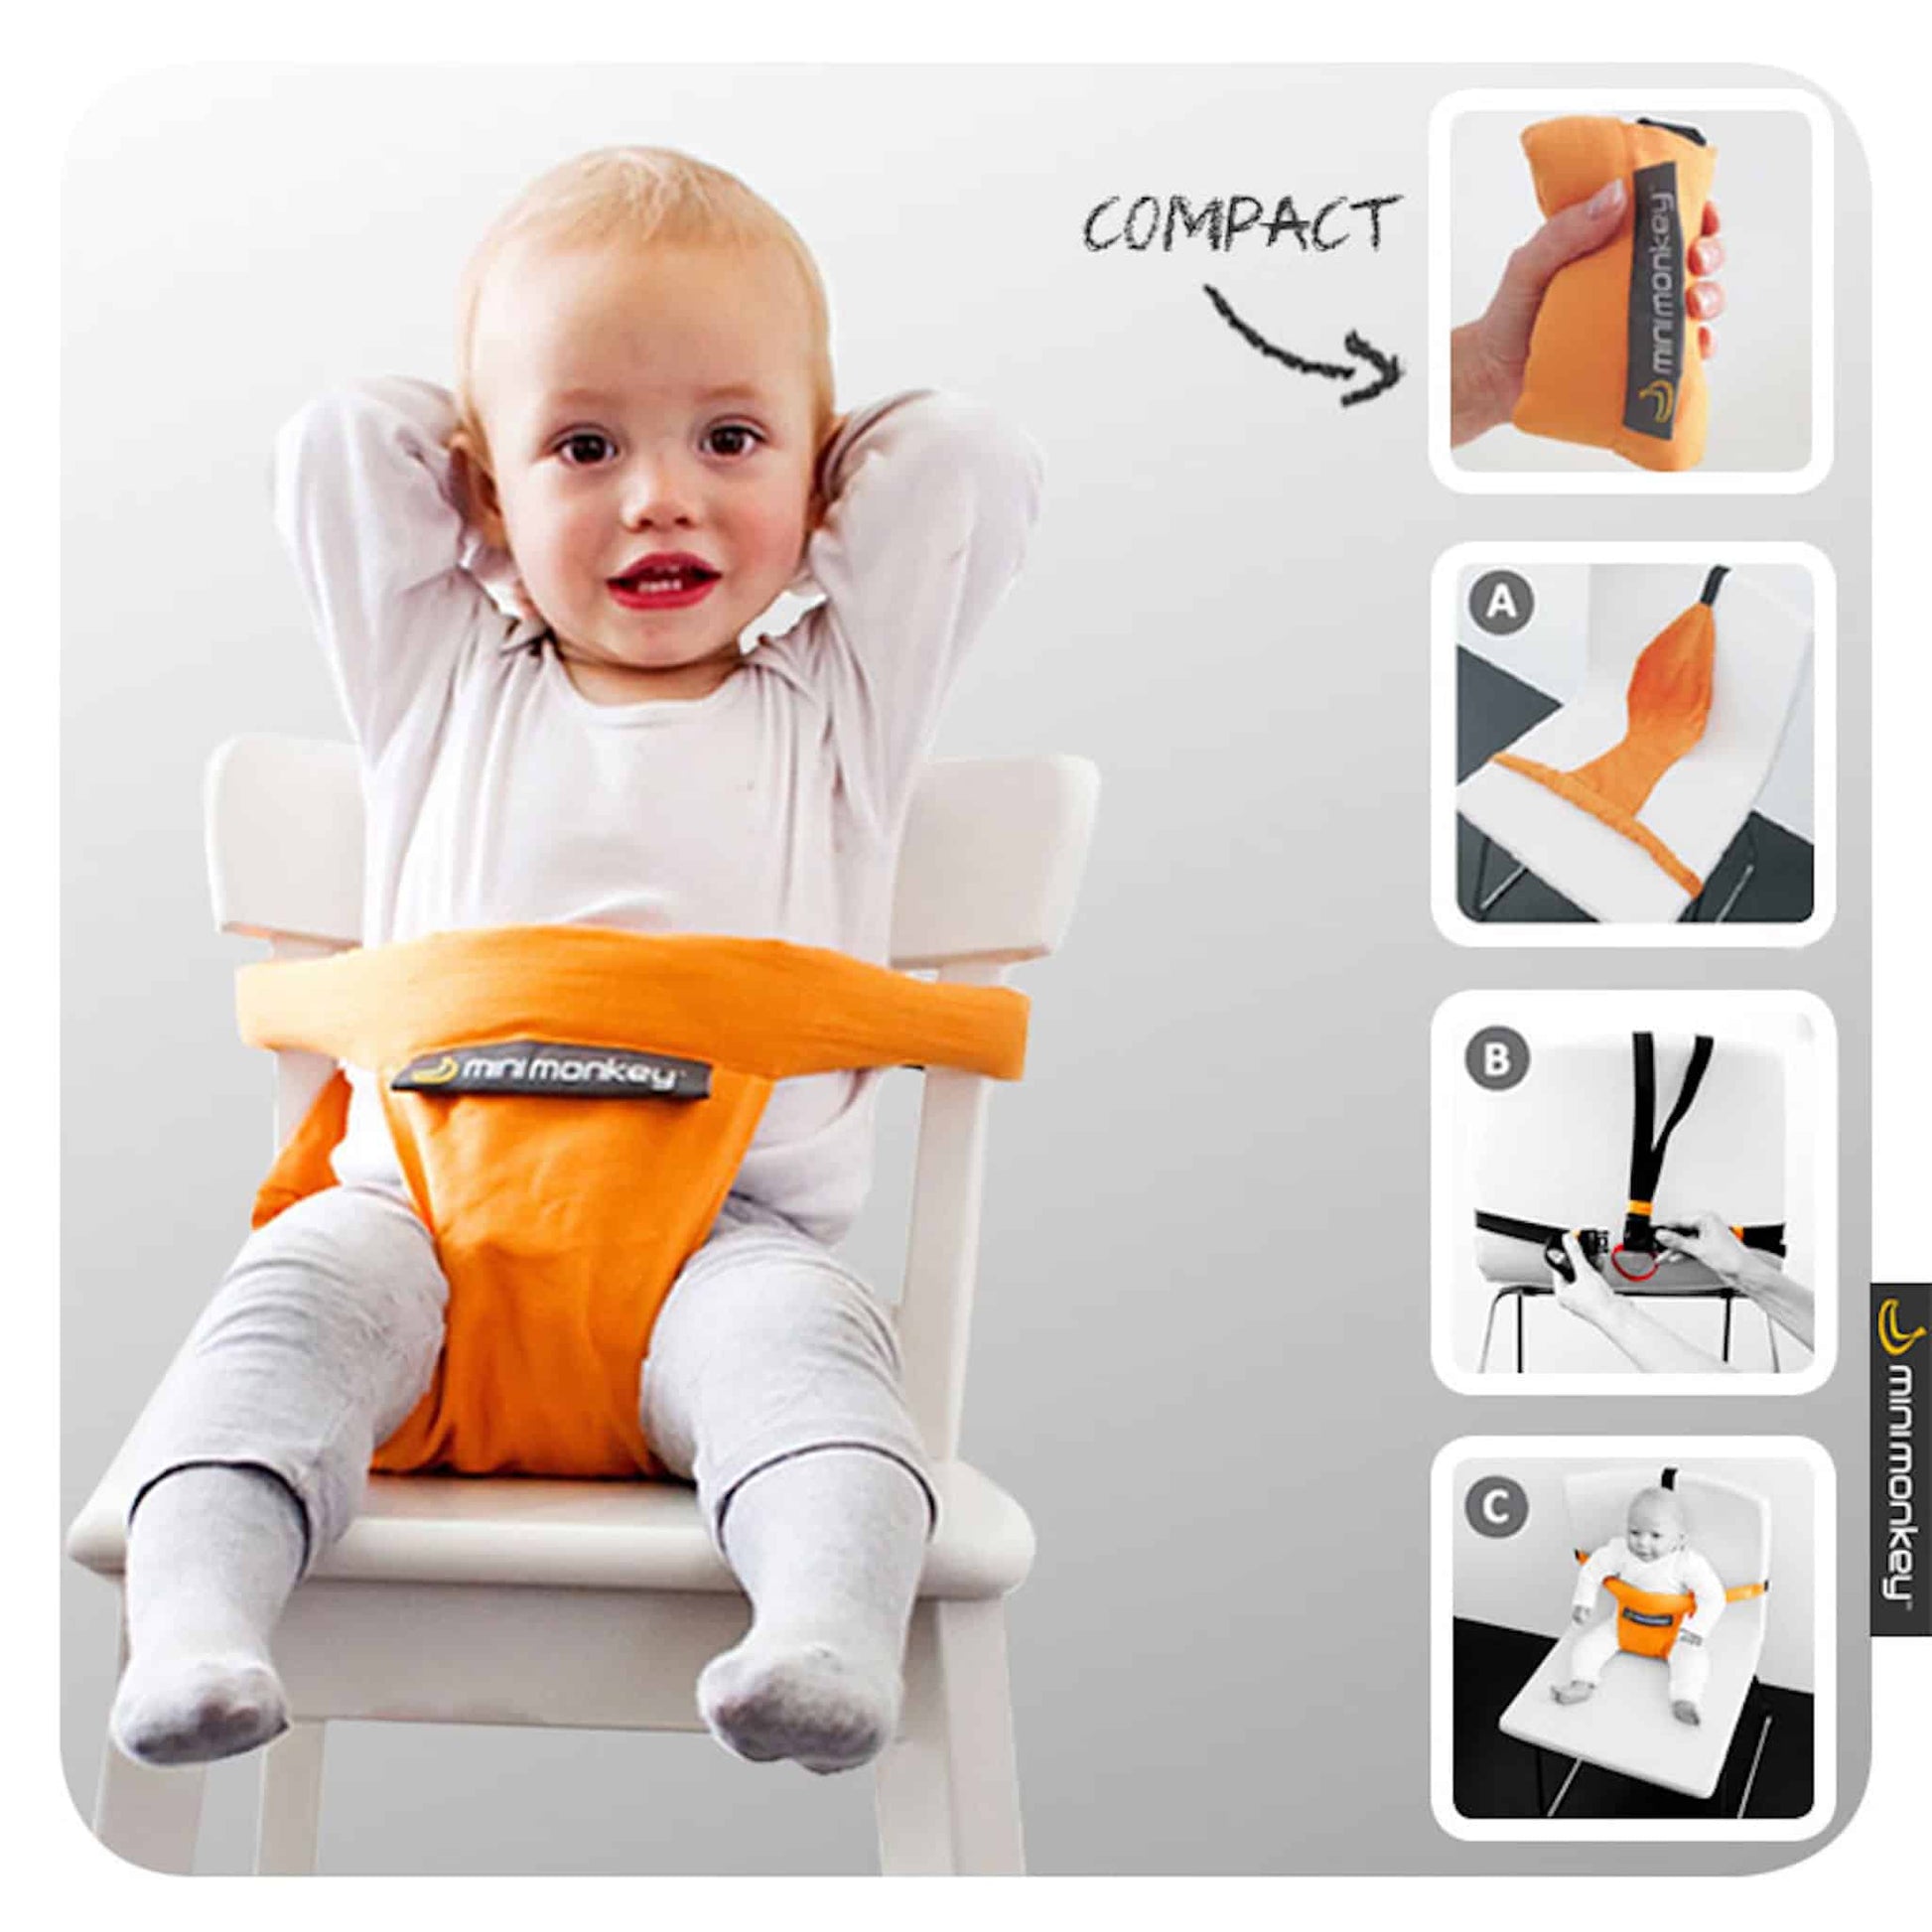 Minimonkey Mini Chair Instructions